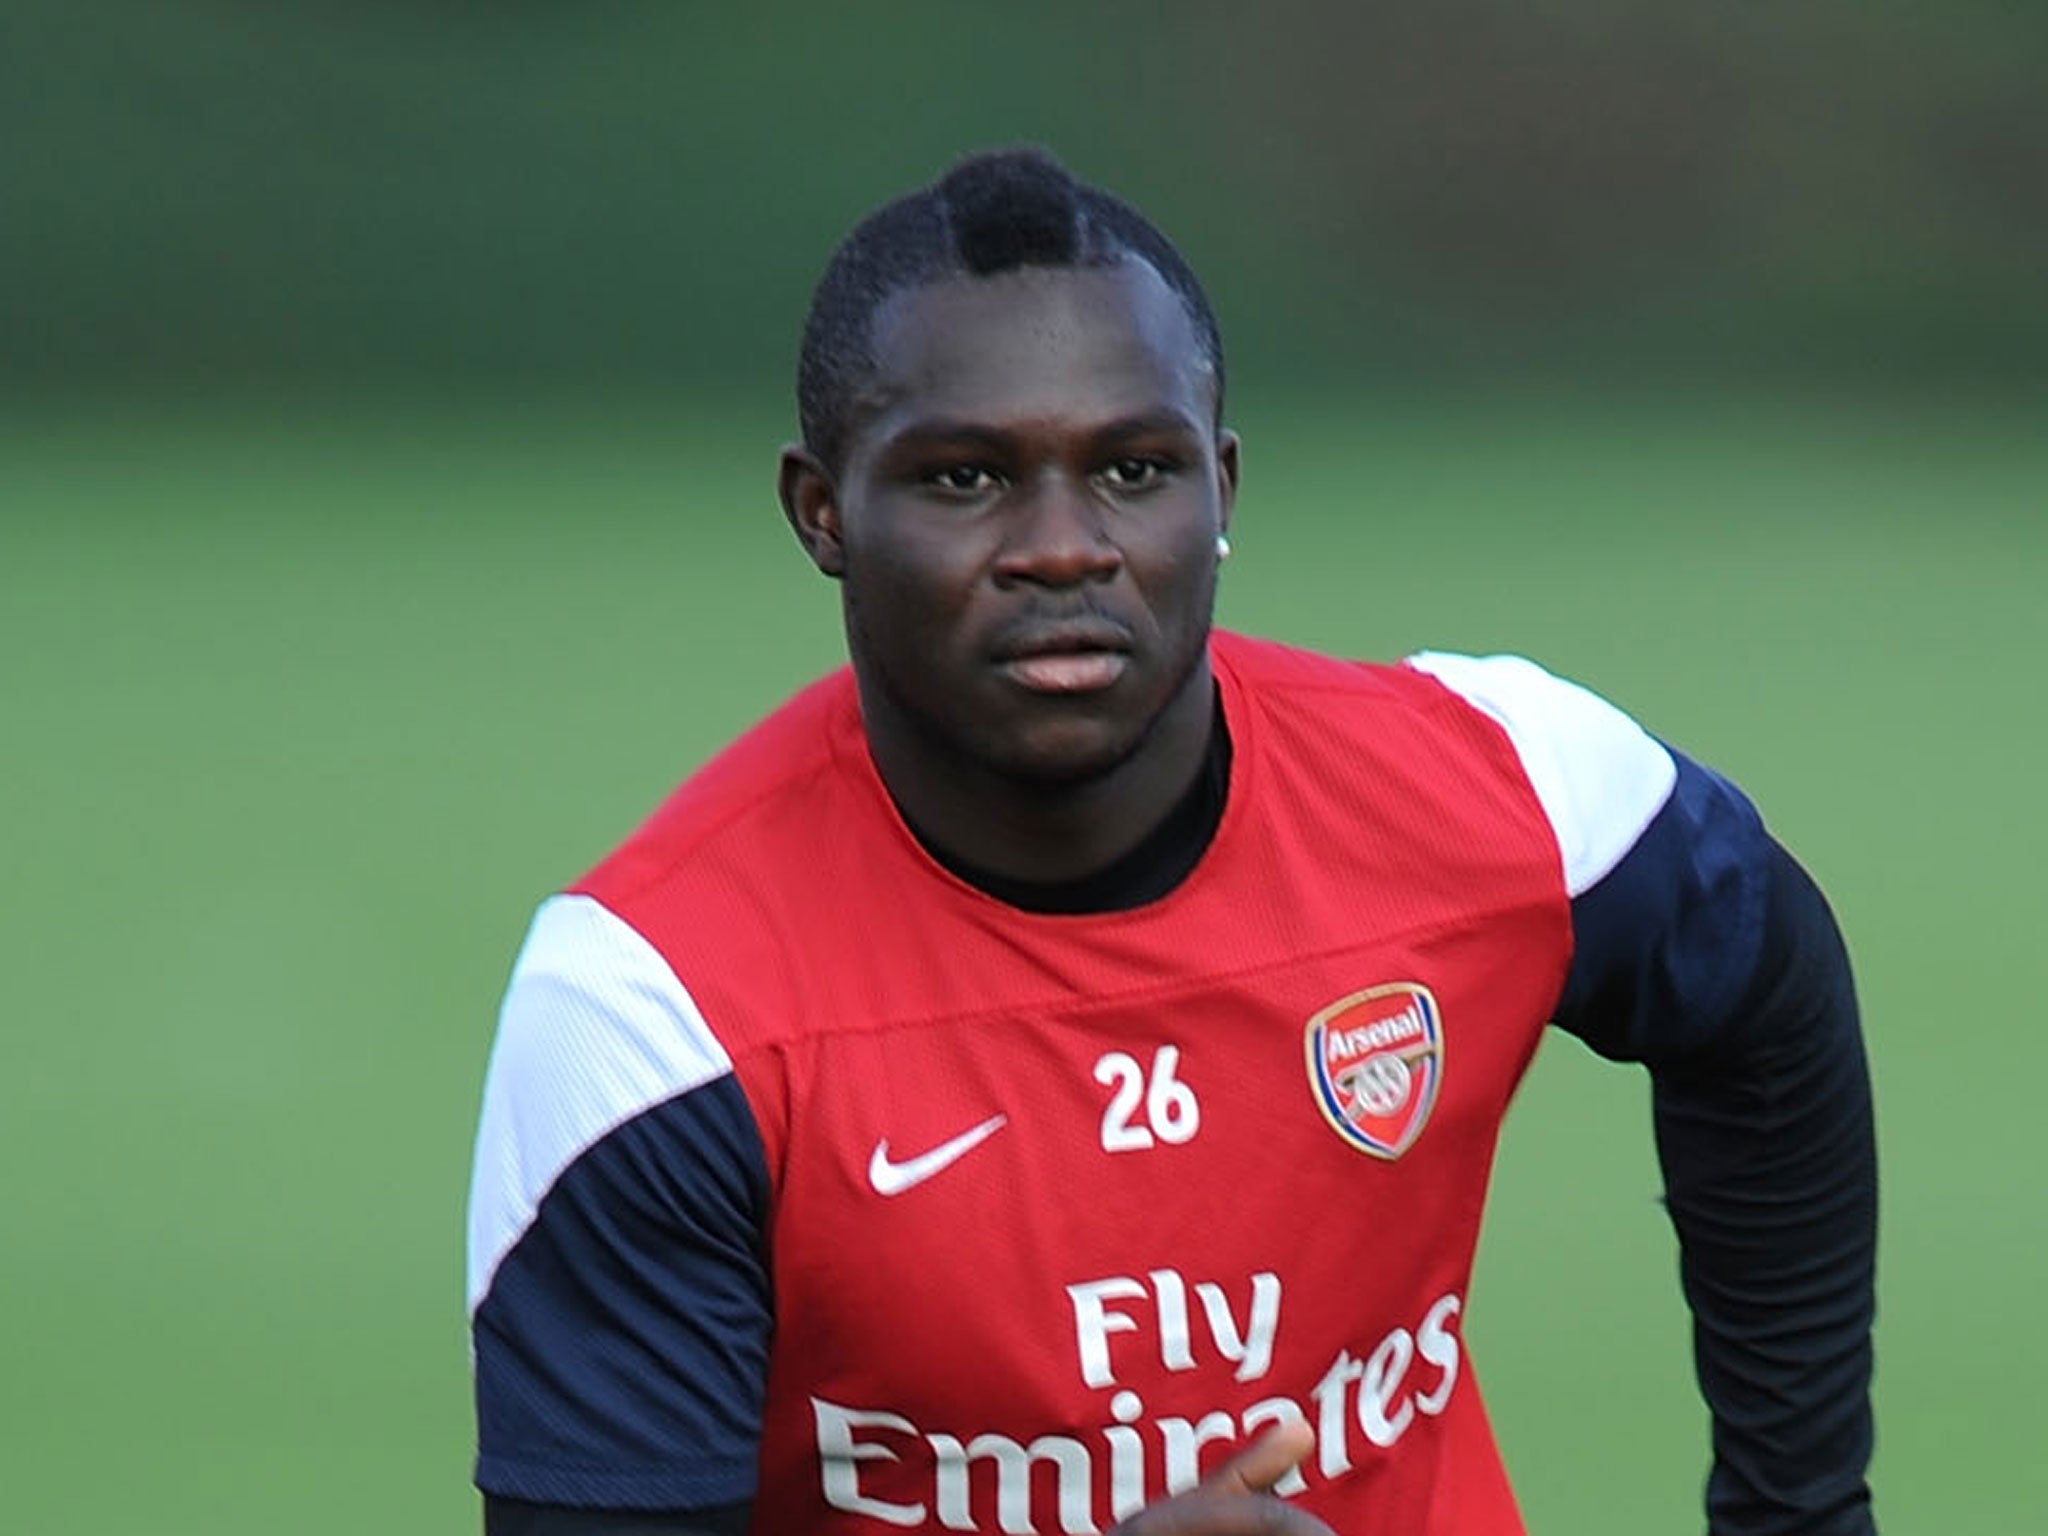 Emmanuel Frimpong trains with Arsenal last week